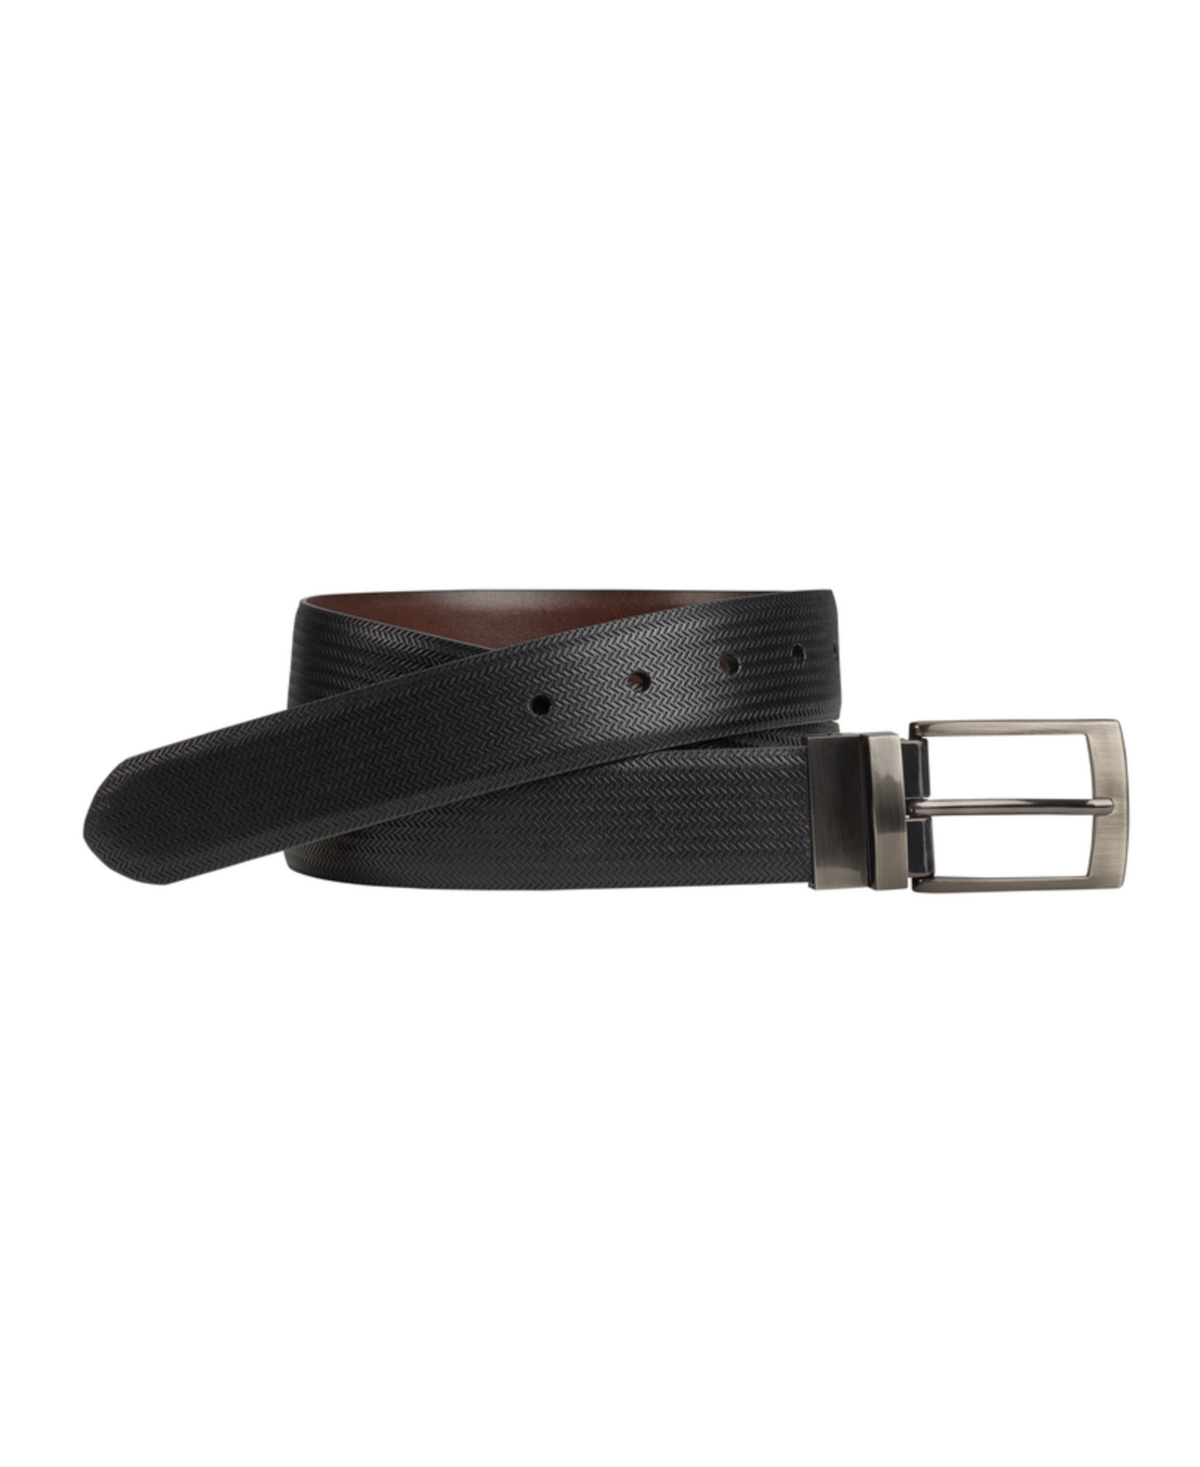 Men's Reversible Dress Belt - Black, Mahogany